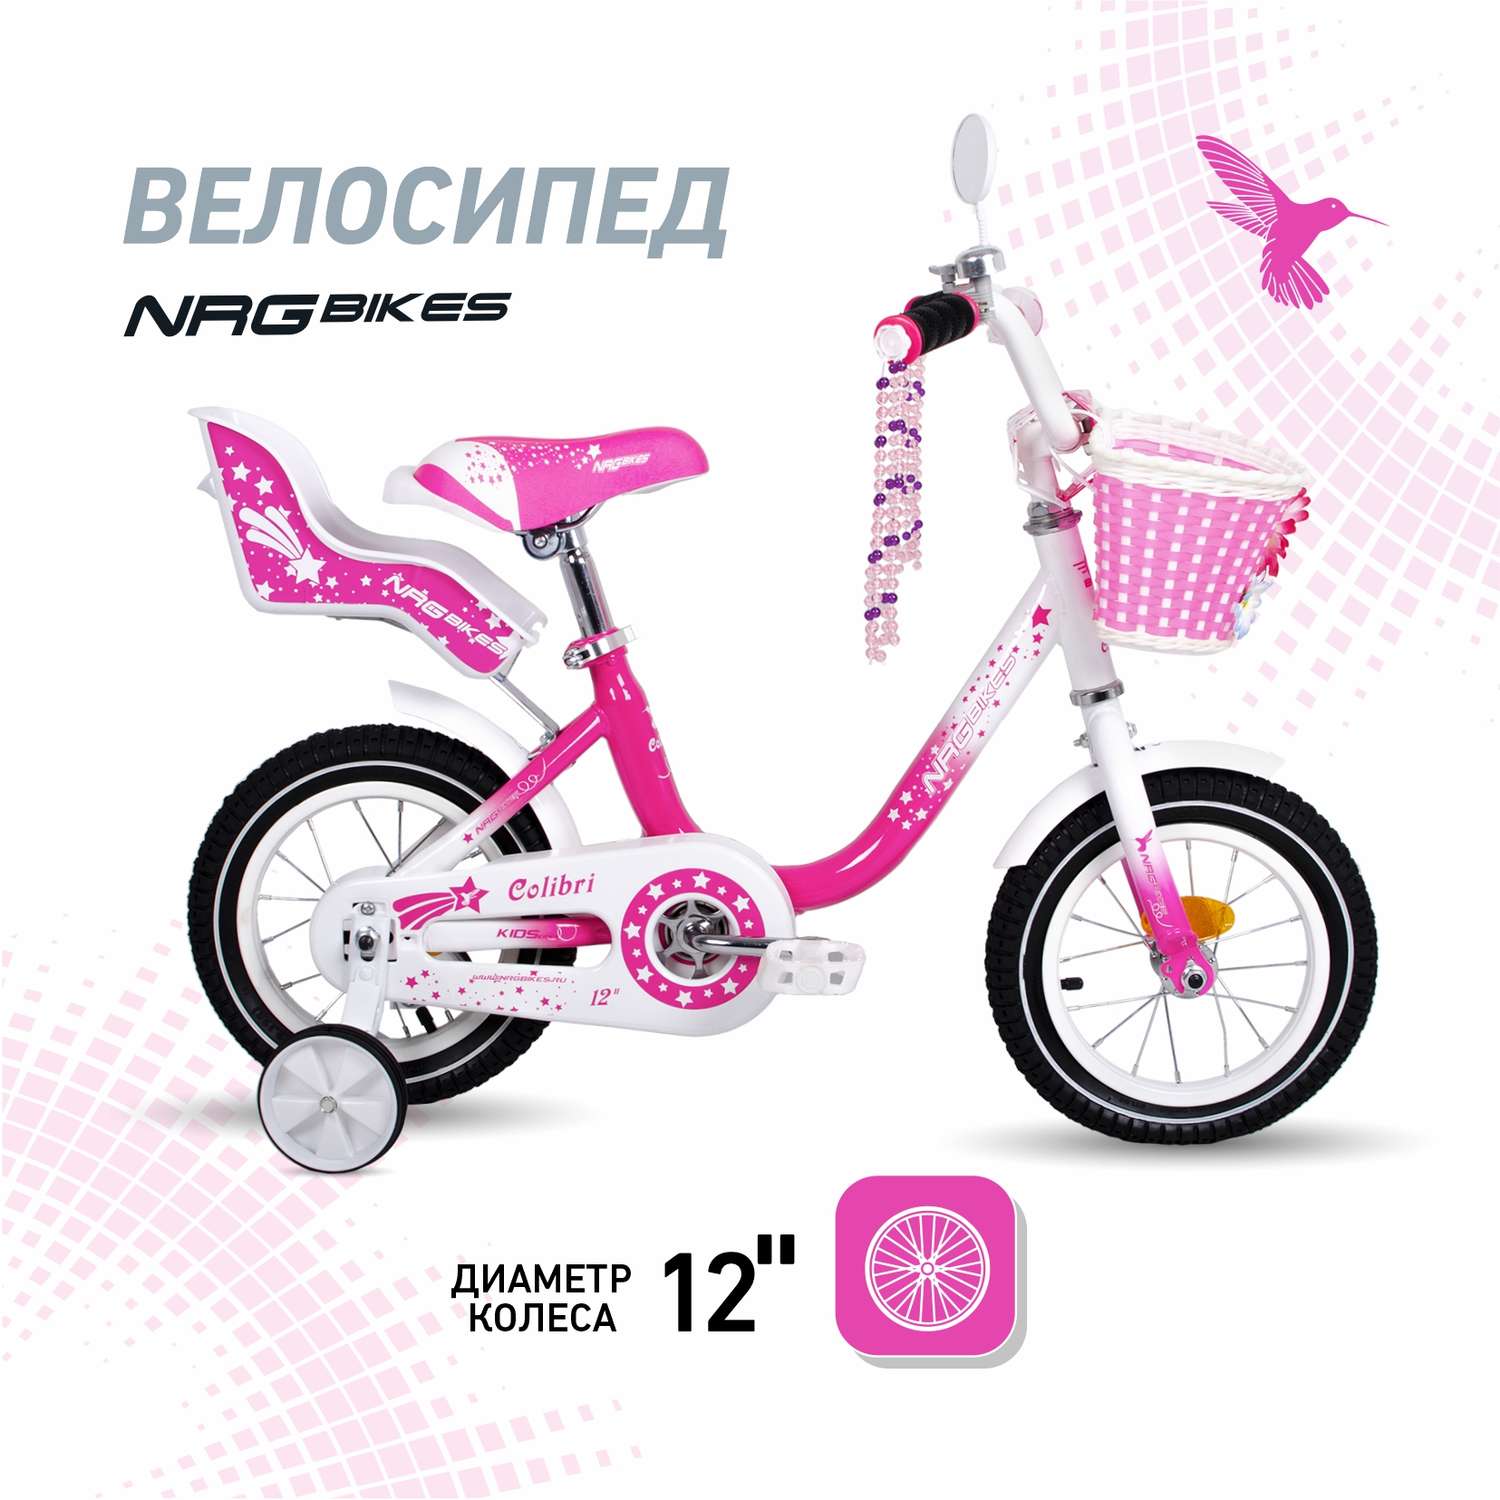 Велосипед NRG BIKES COLIBRI 12 pink-white - фото 1